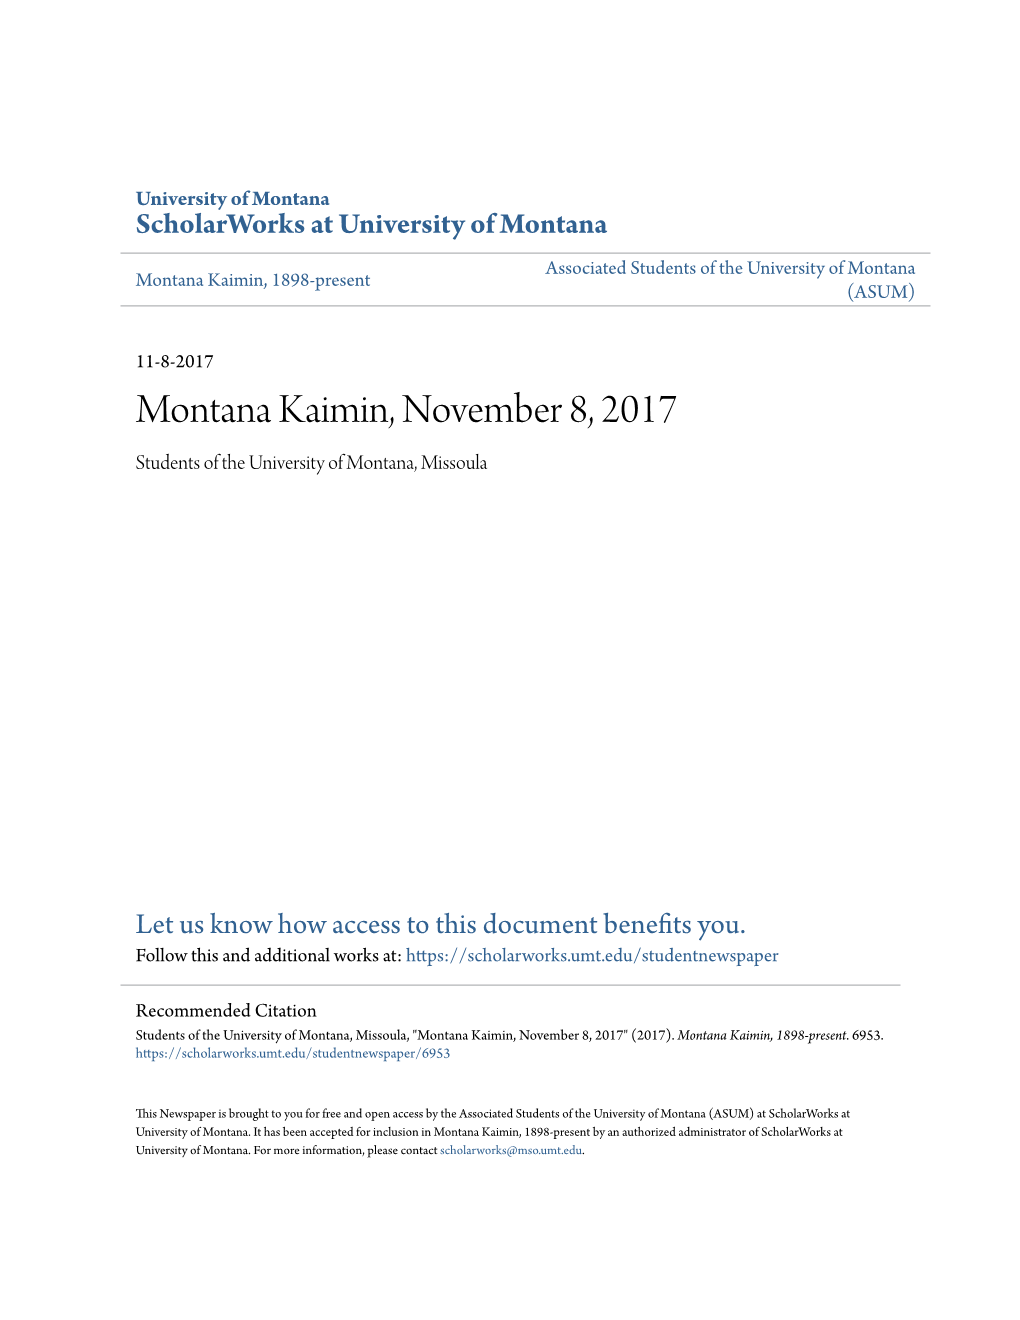 Montana Kaimin, November 8, 2017 Students of the University of Montana, Missoula